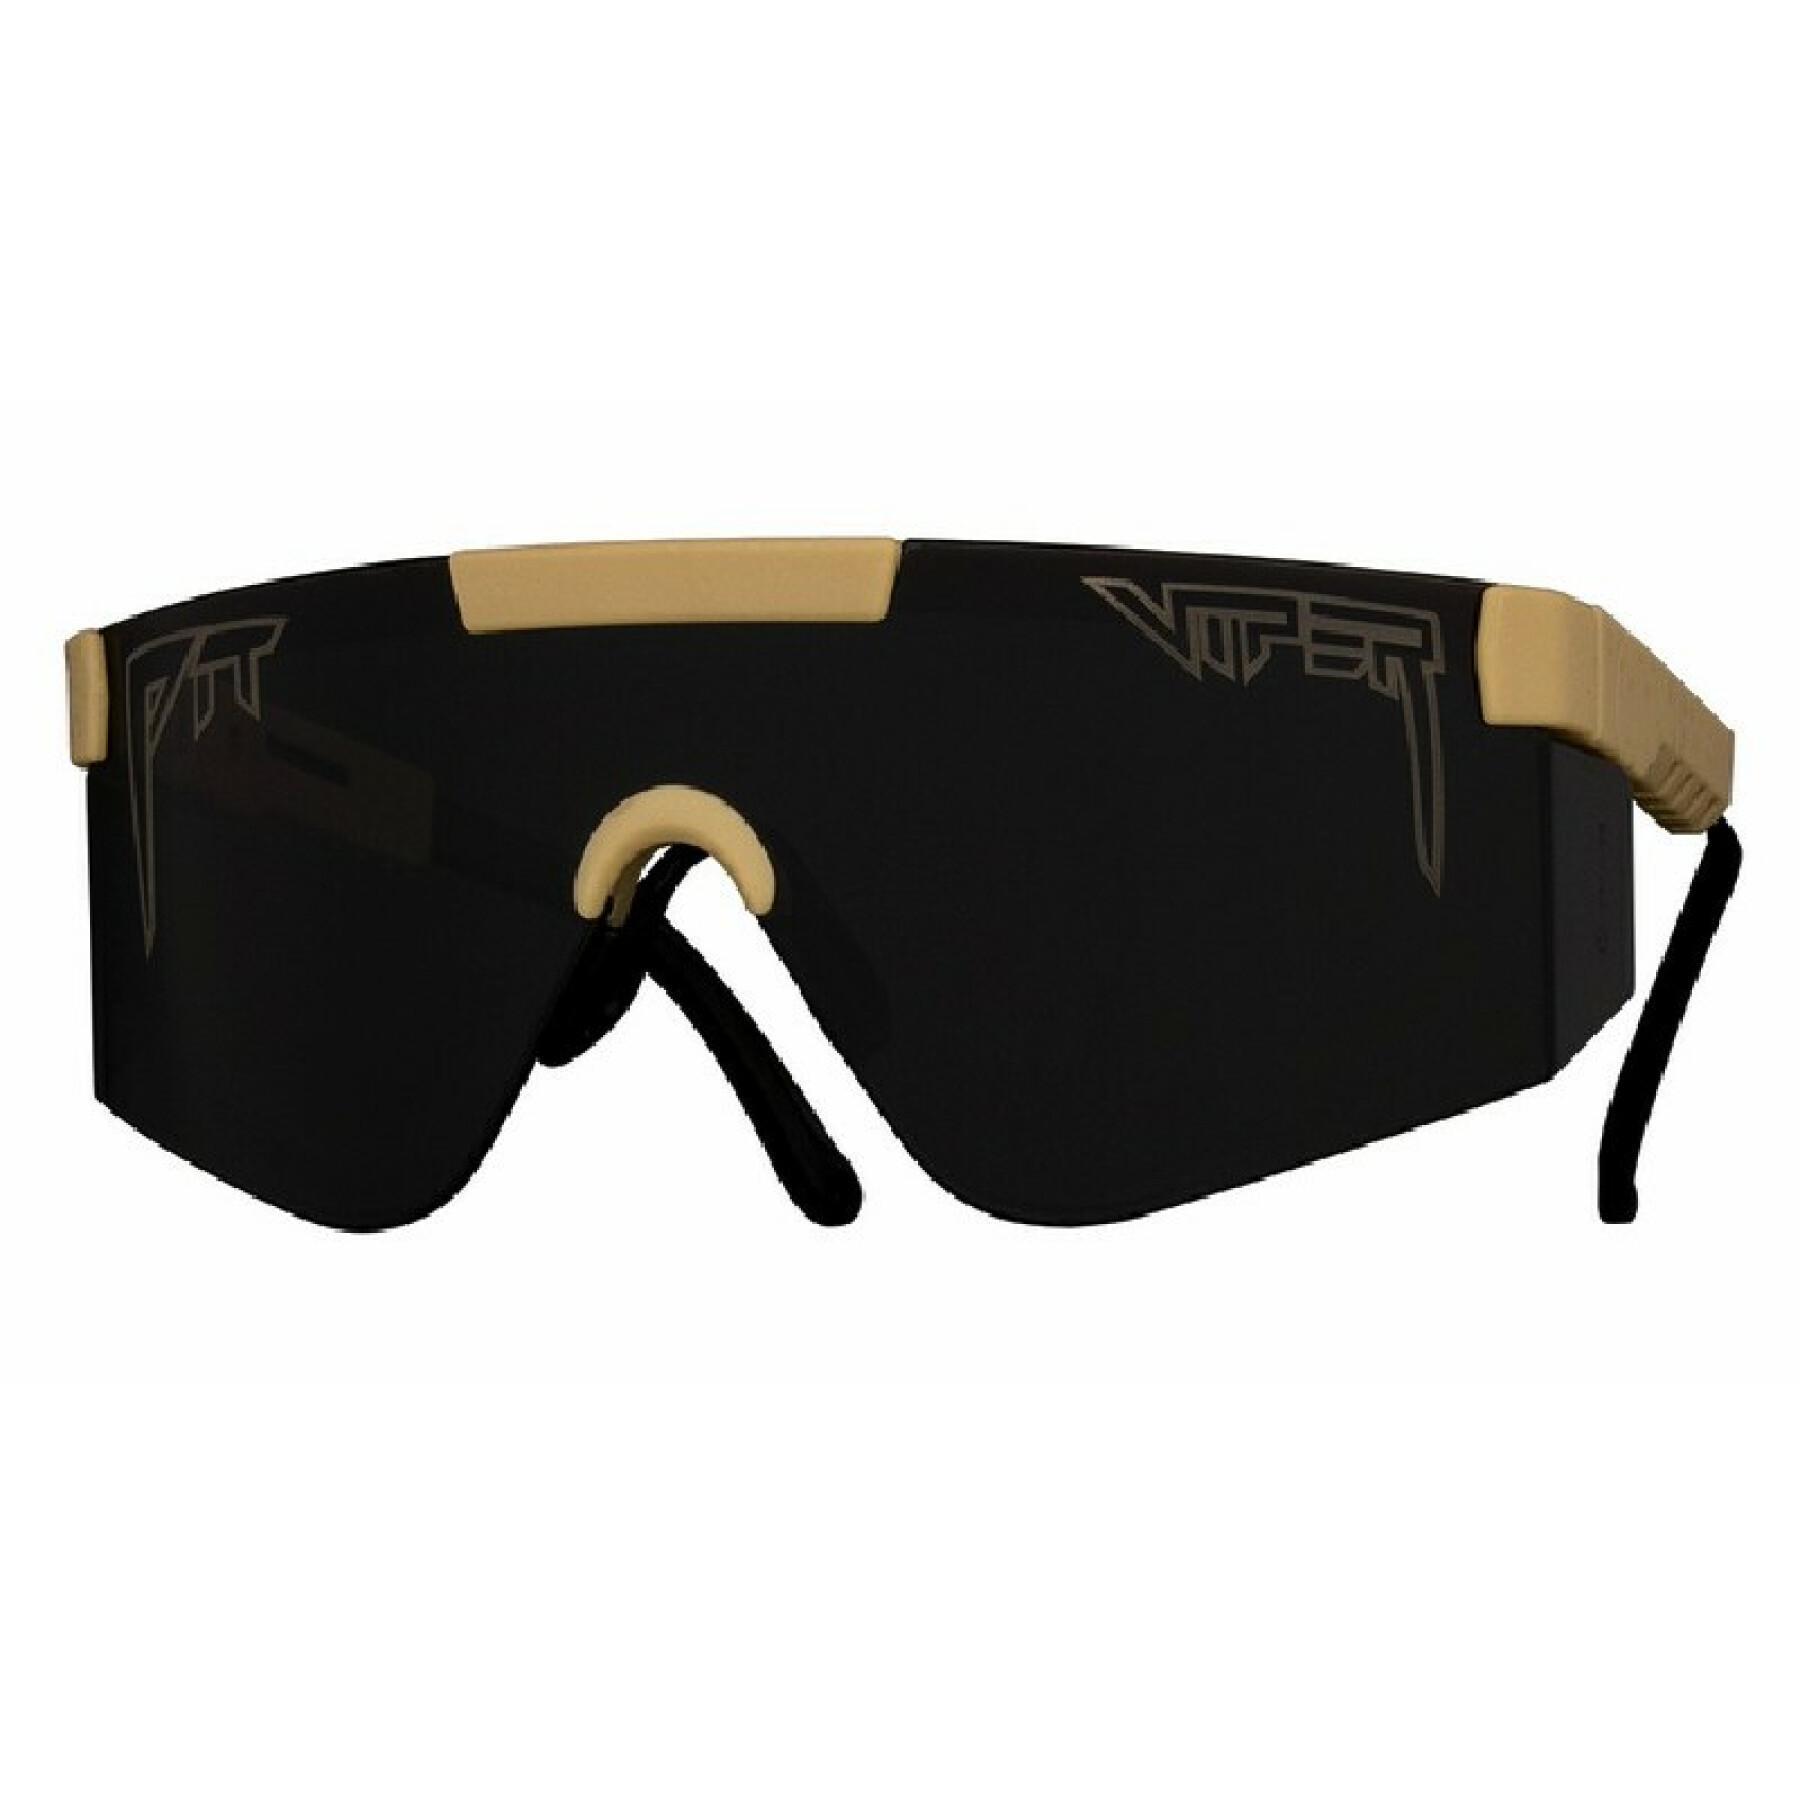 Sunglasses Pit Viper The Sandstorm 2000 mil-spec